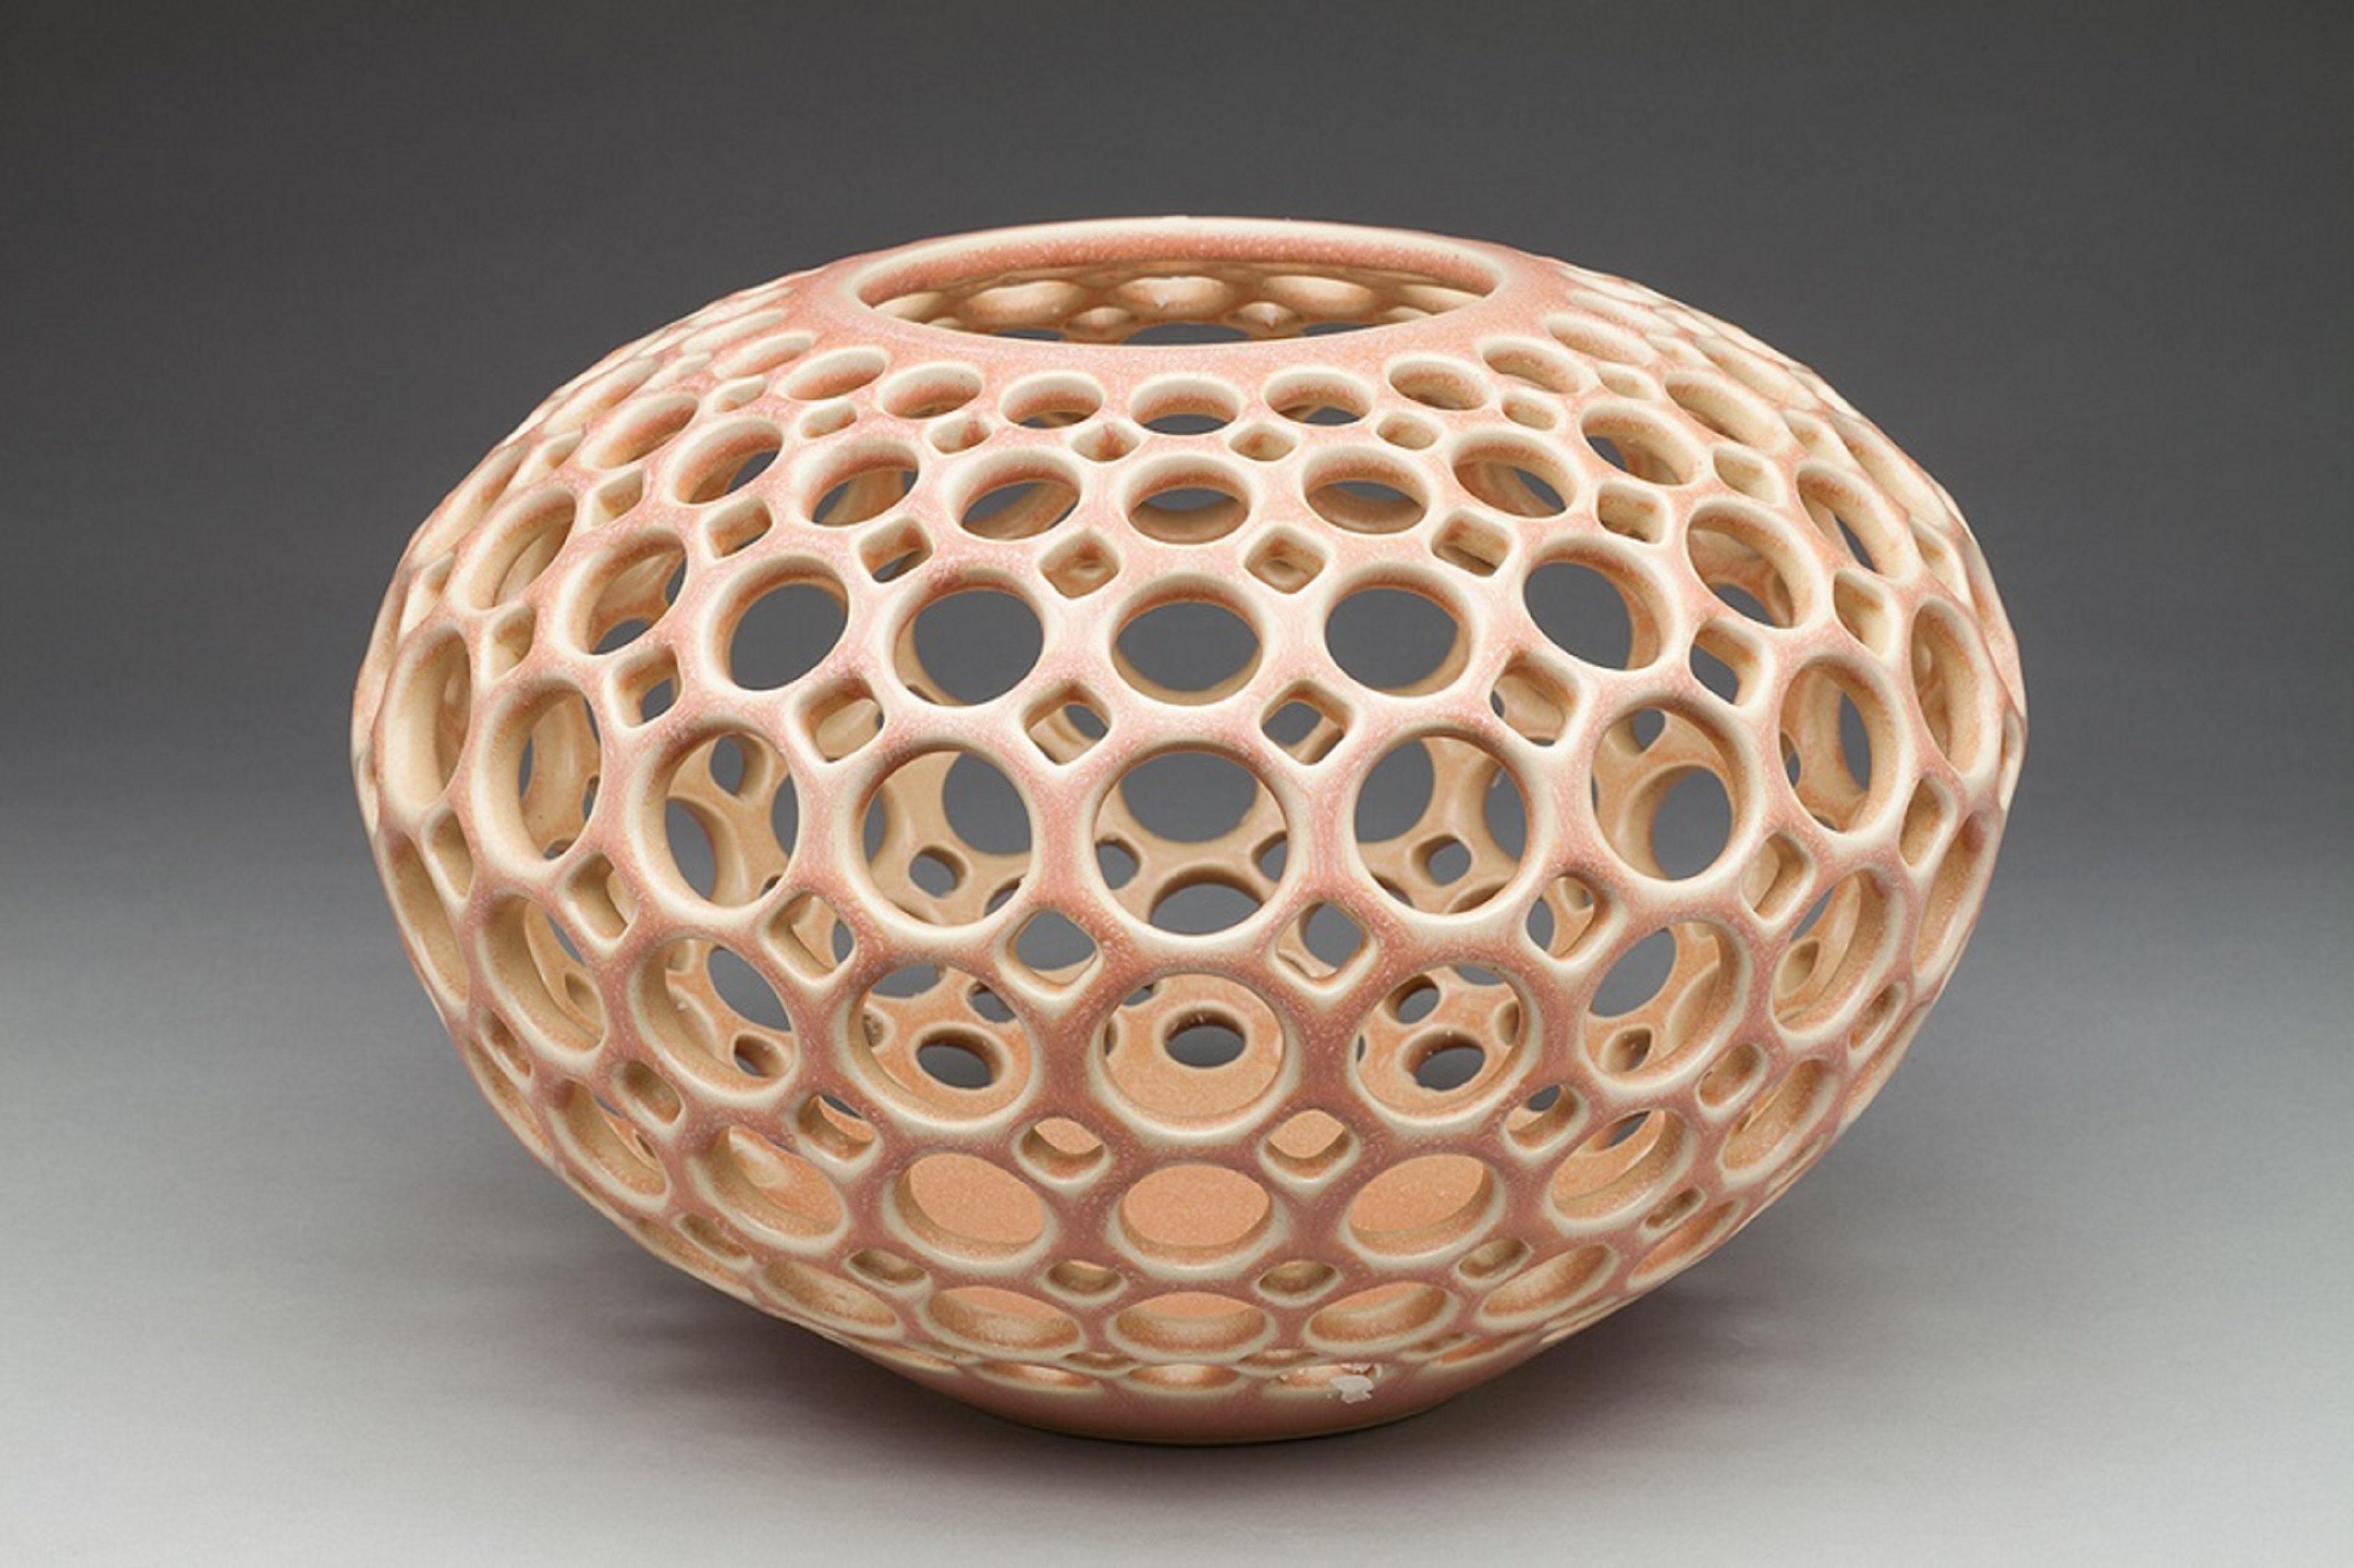 American Round Blush / Pink Pierced Tabletop Ceramic Sculpture, In Stock